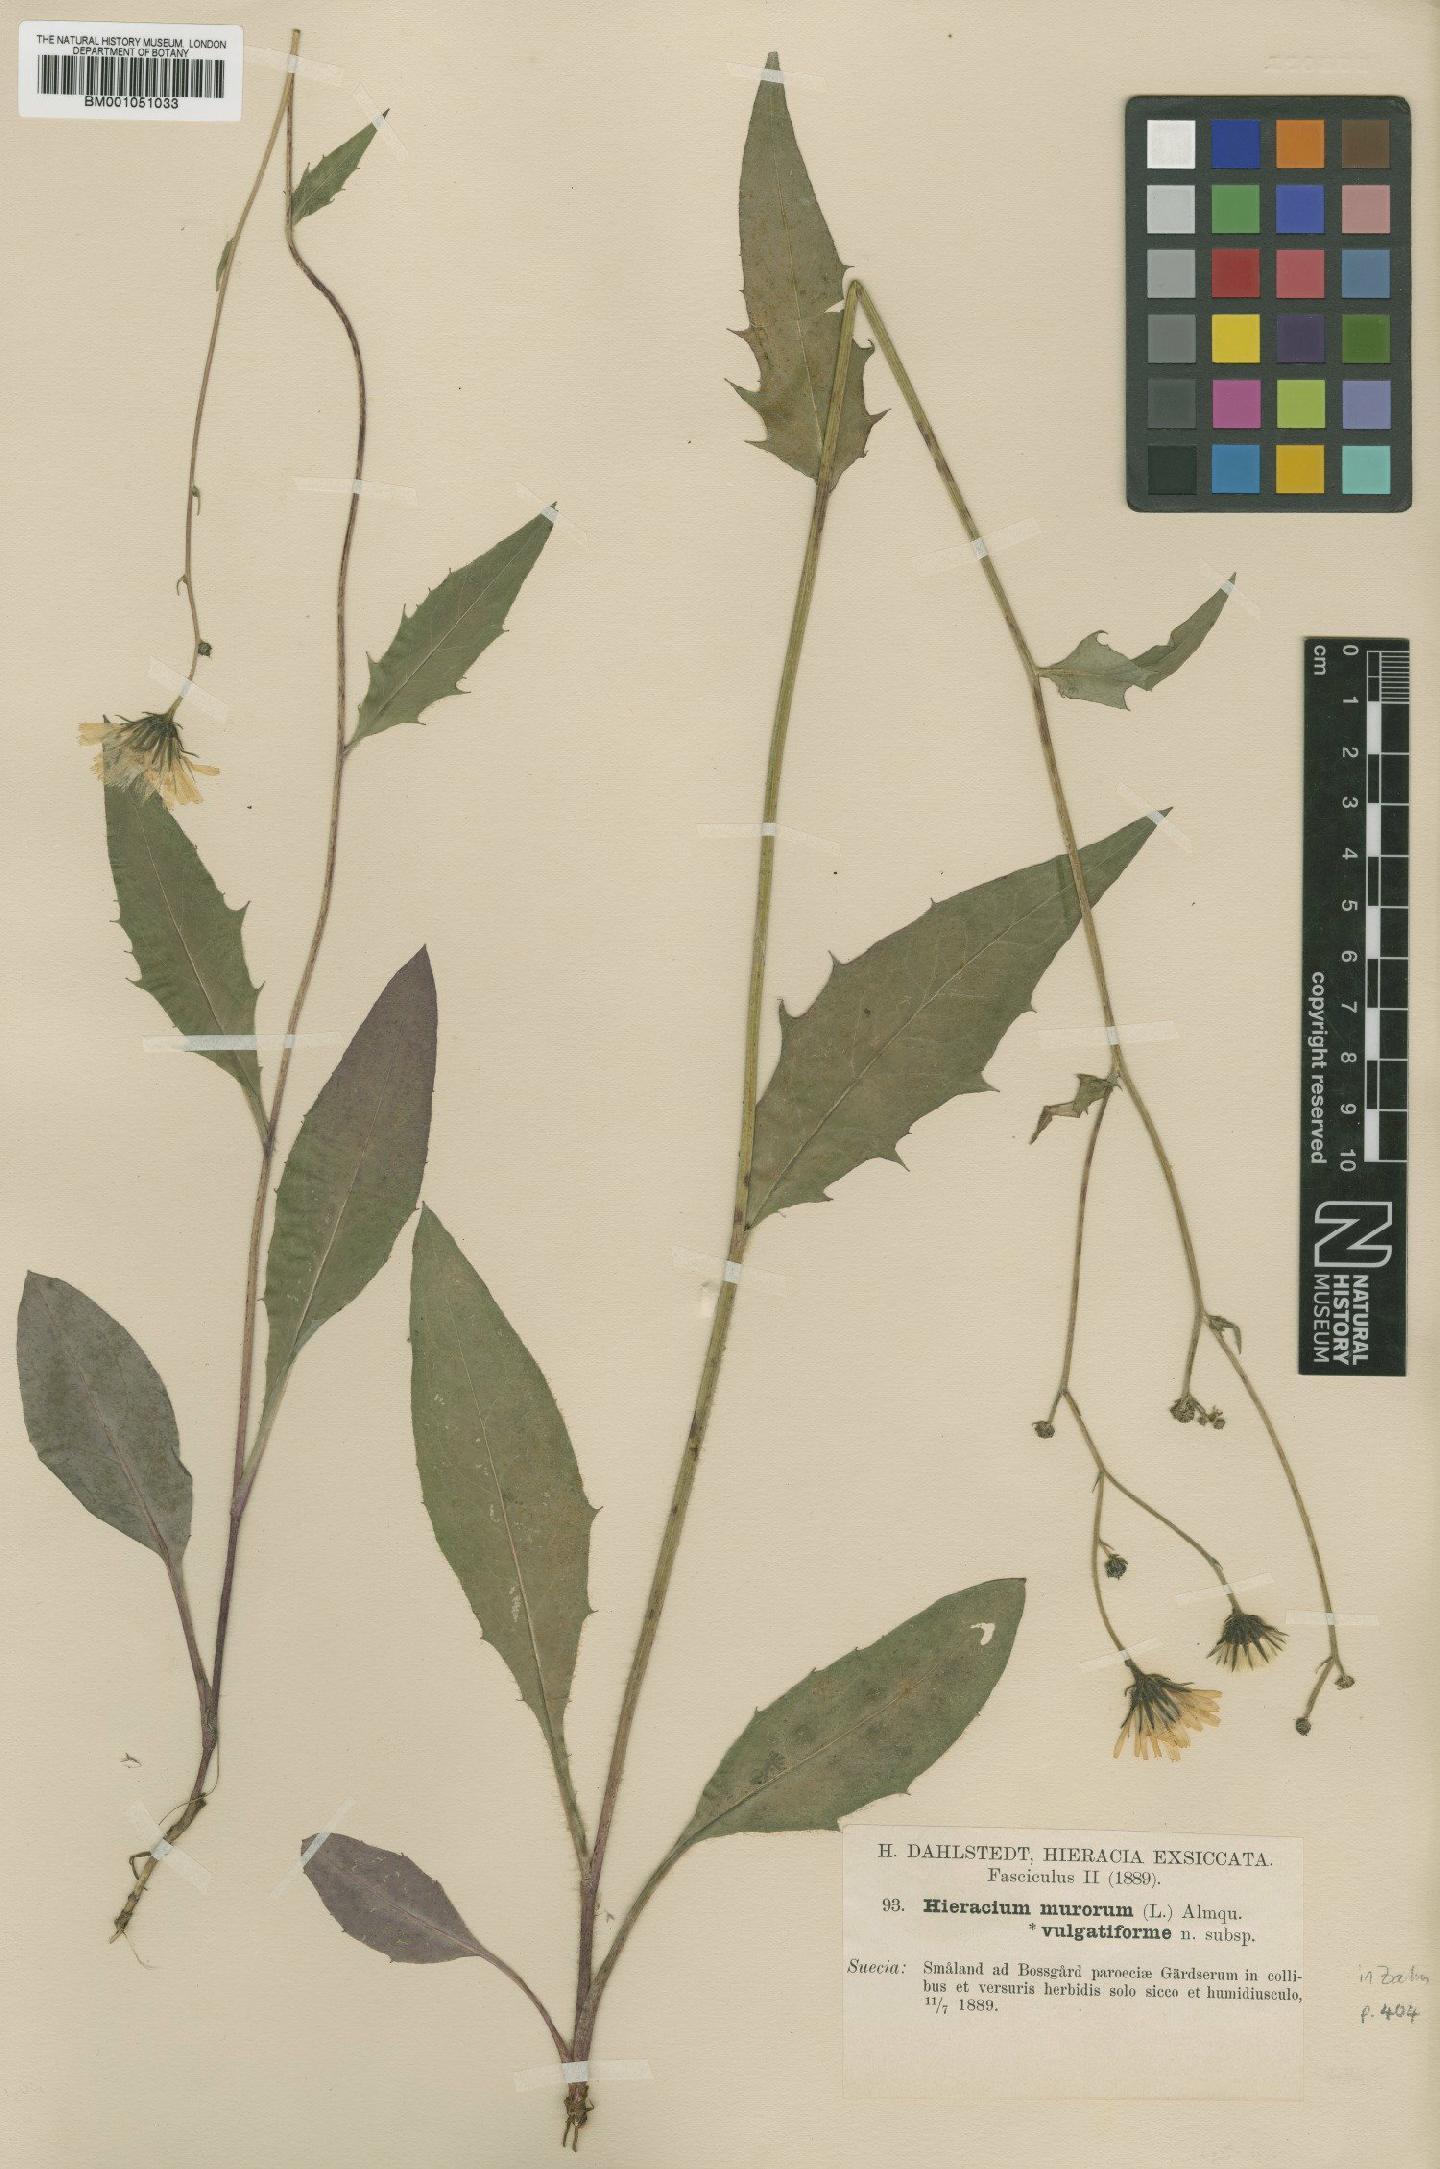 To NHMUK collection (Hieracium levicaule subsp. vulgatiforme (Dahlst.) Zahn; TYPE; NHMUK:ecatalogue:2415399)